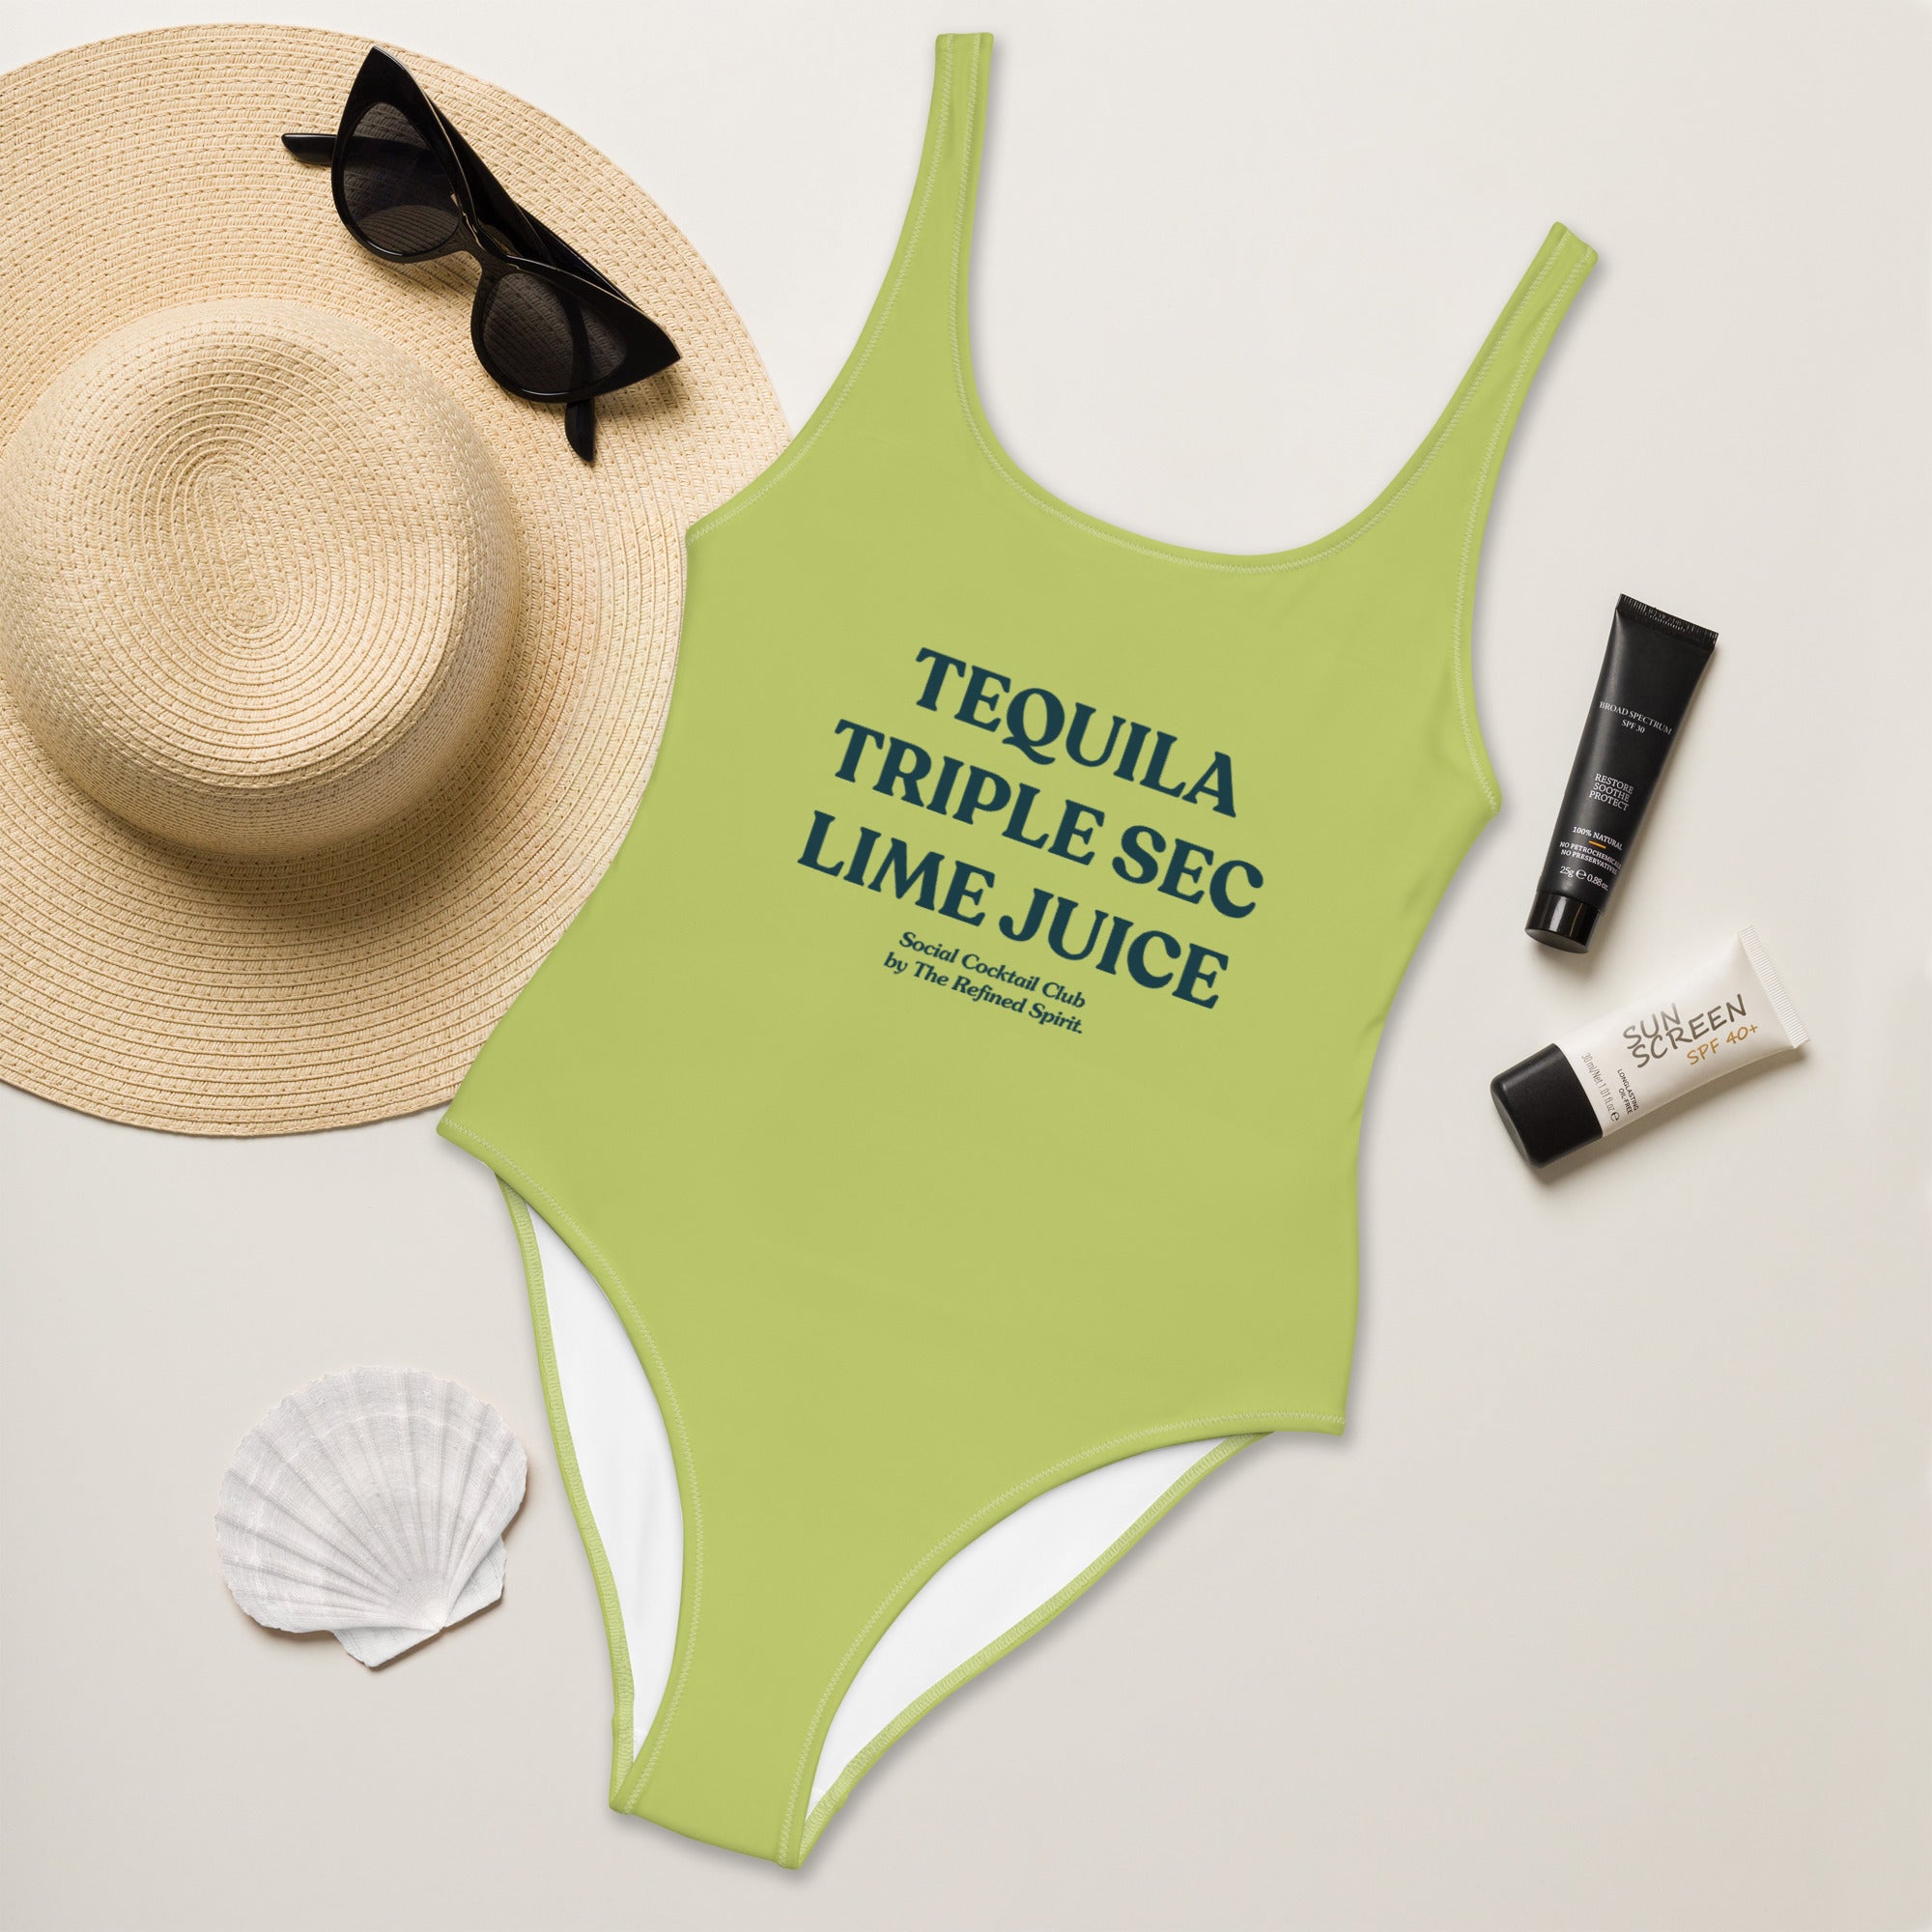 Tequila Triple Sec Lime Juice - Swimsuit